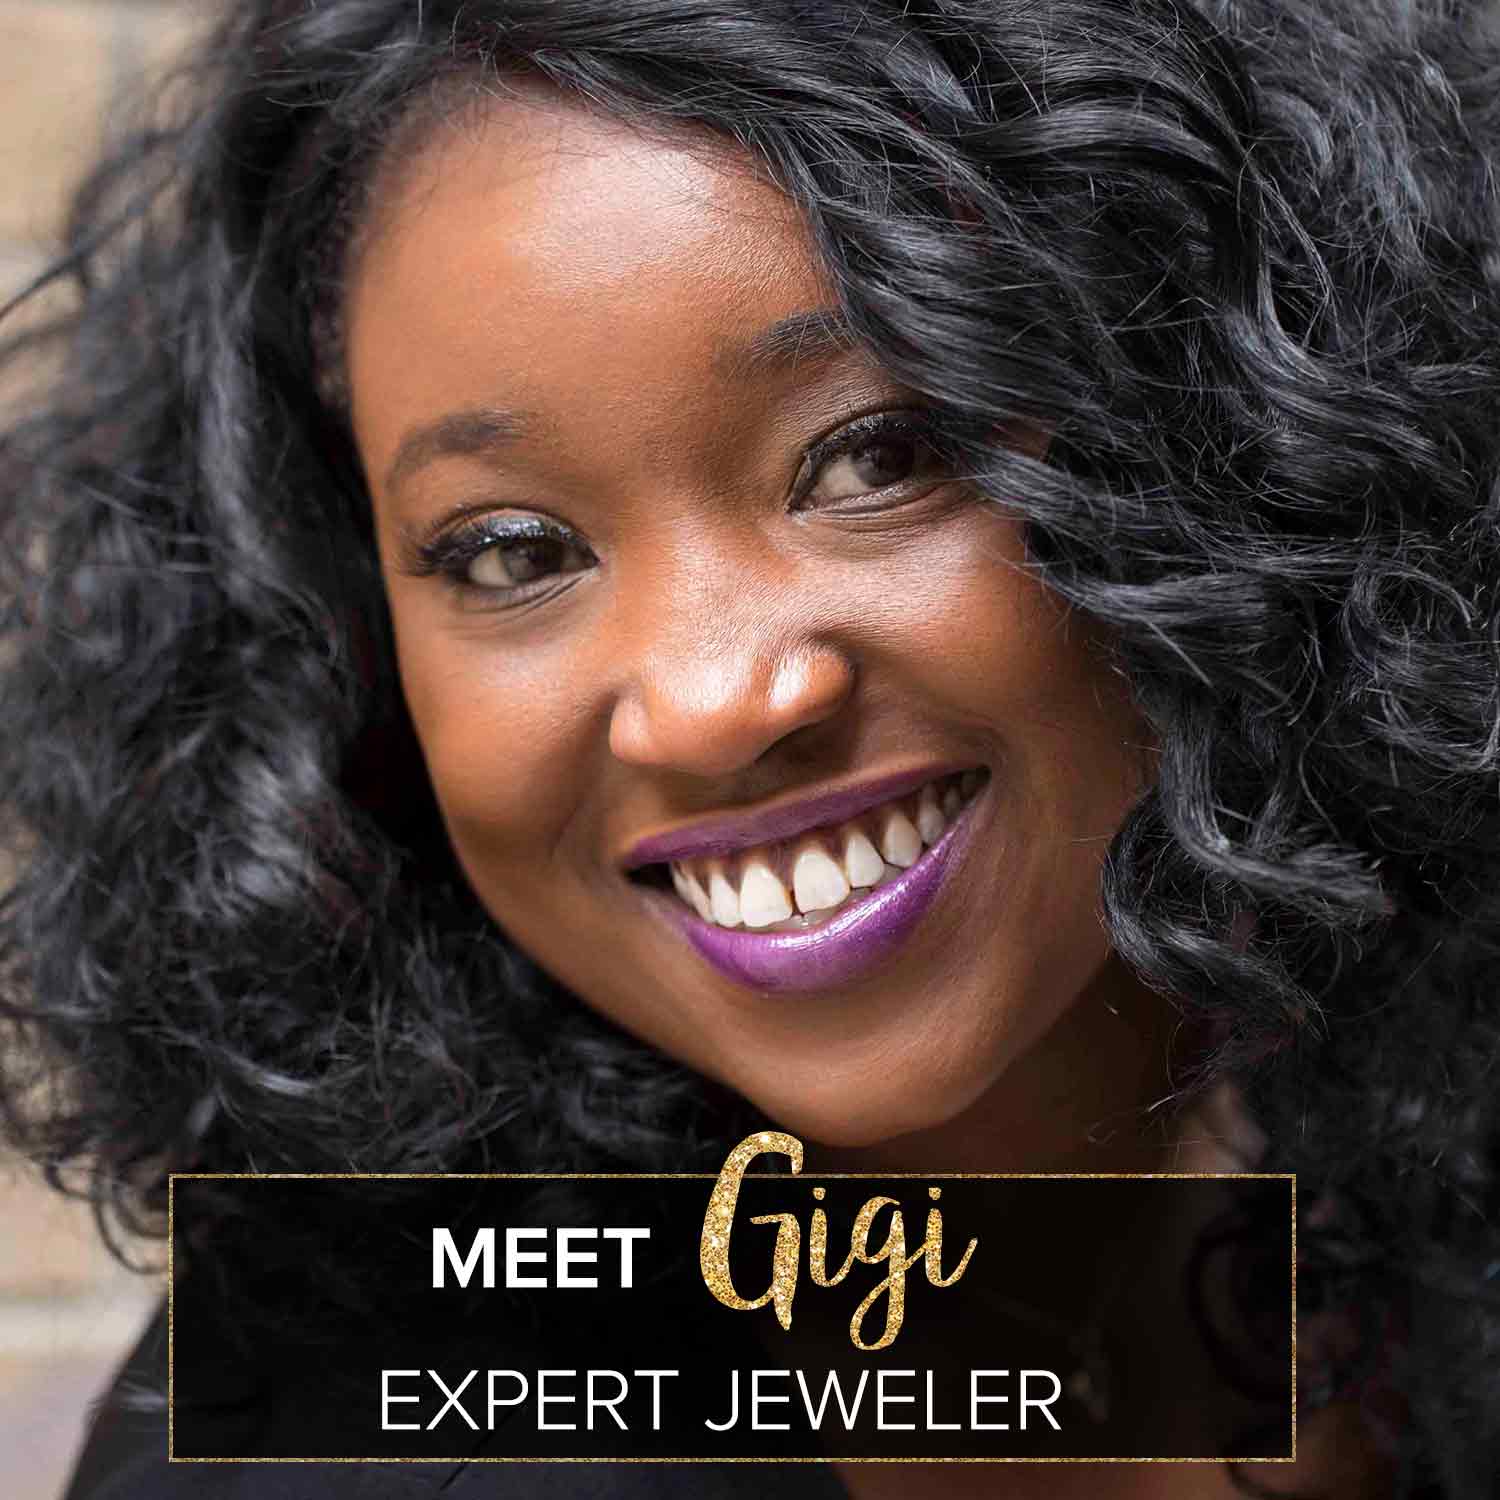 Jeweler, Gigi, at Steven Singer Jewelers